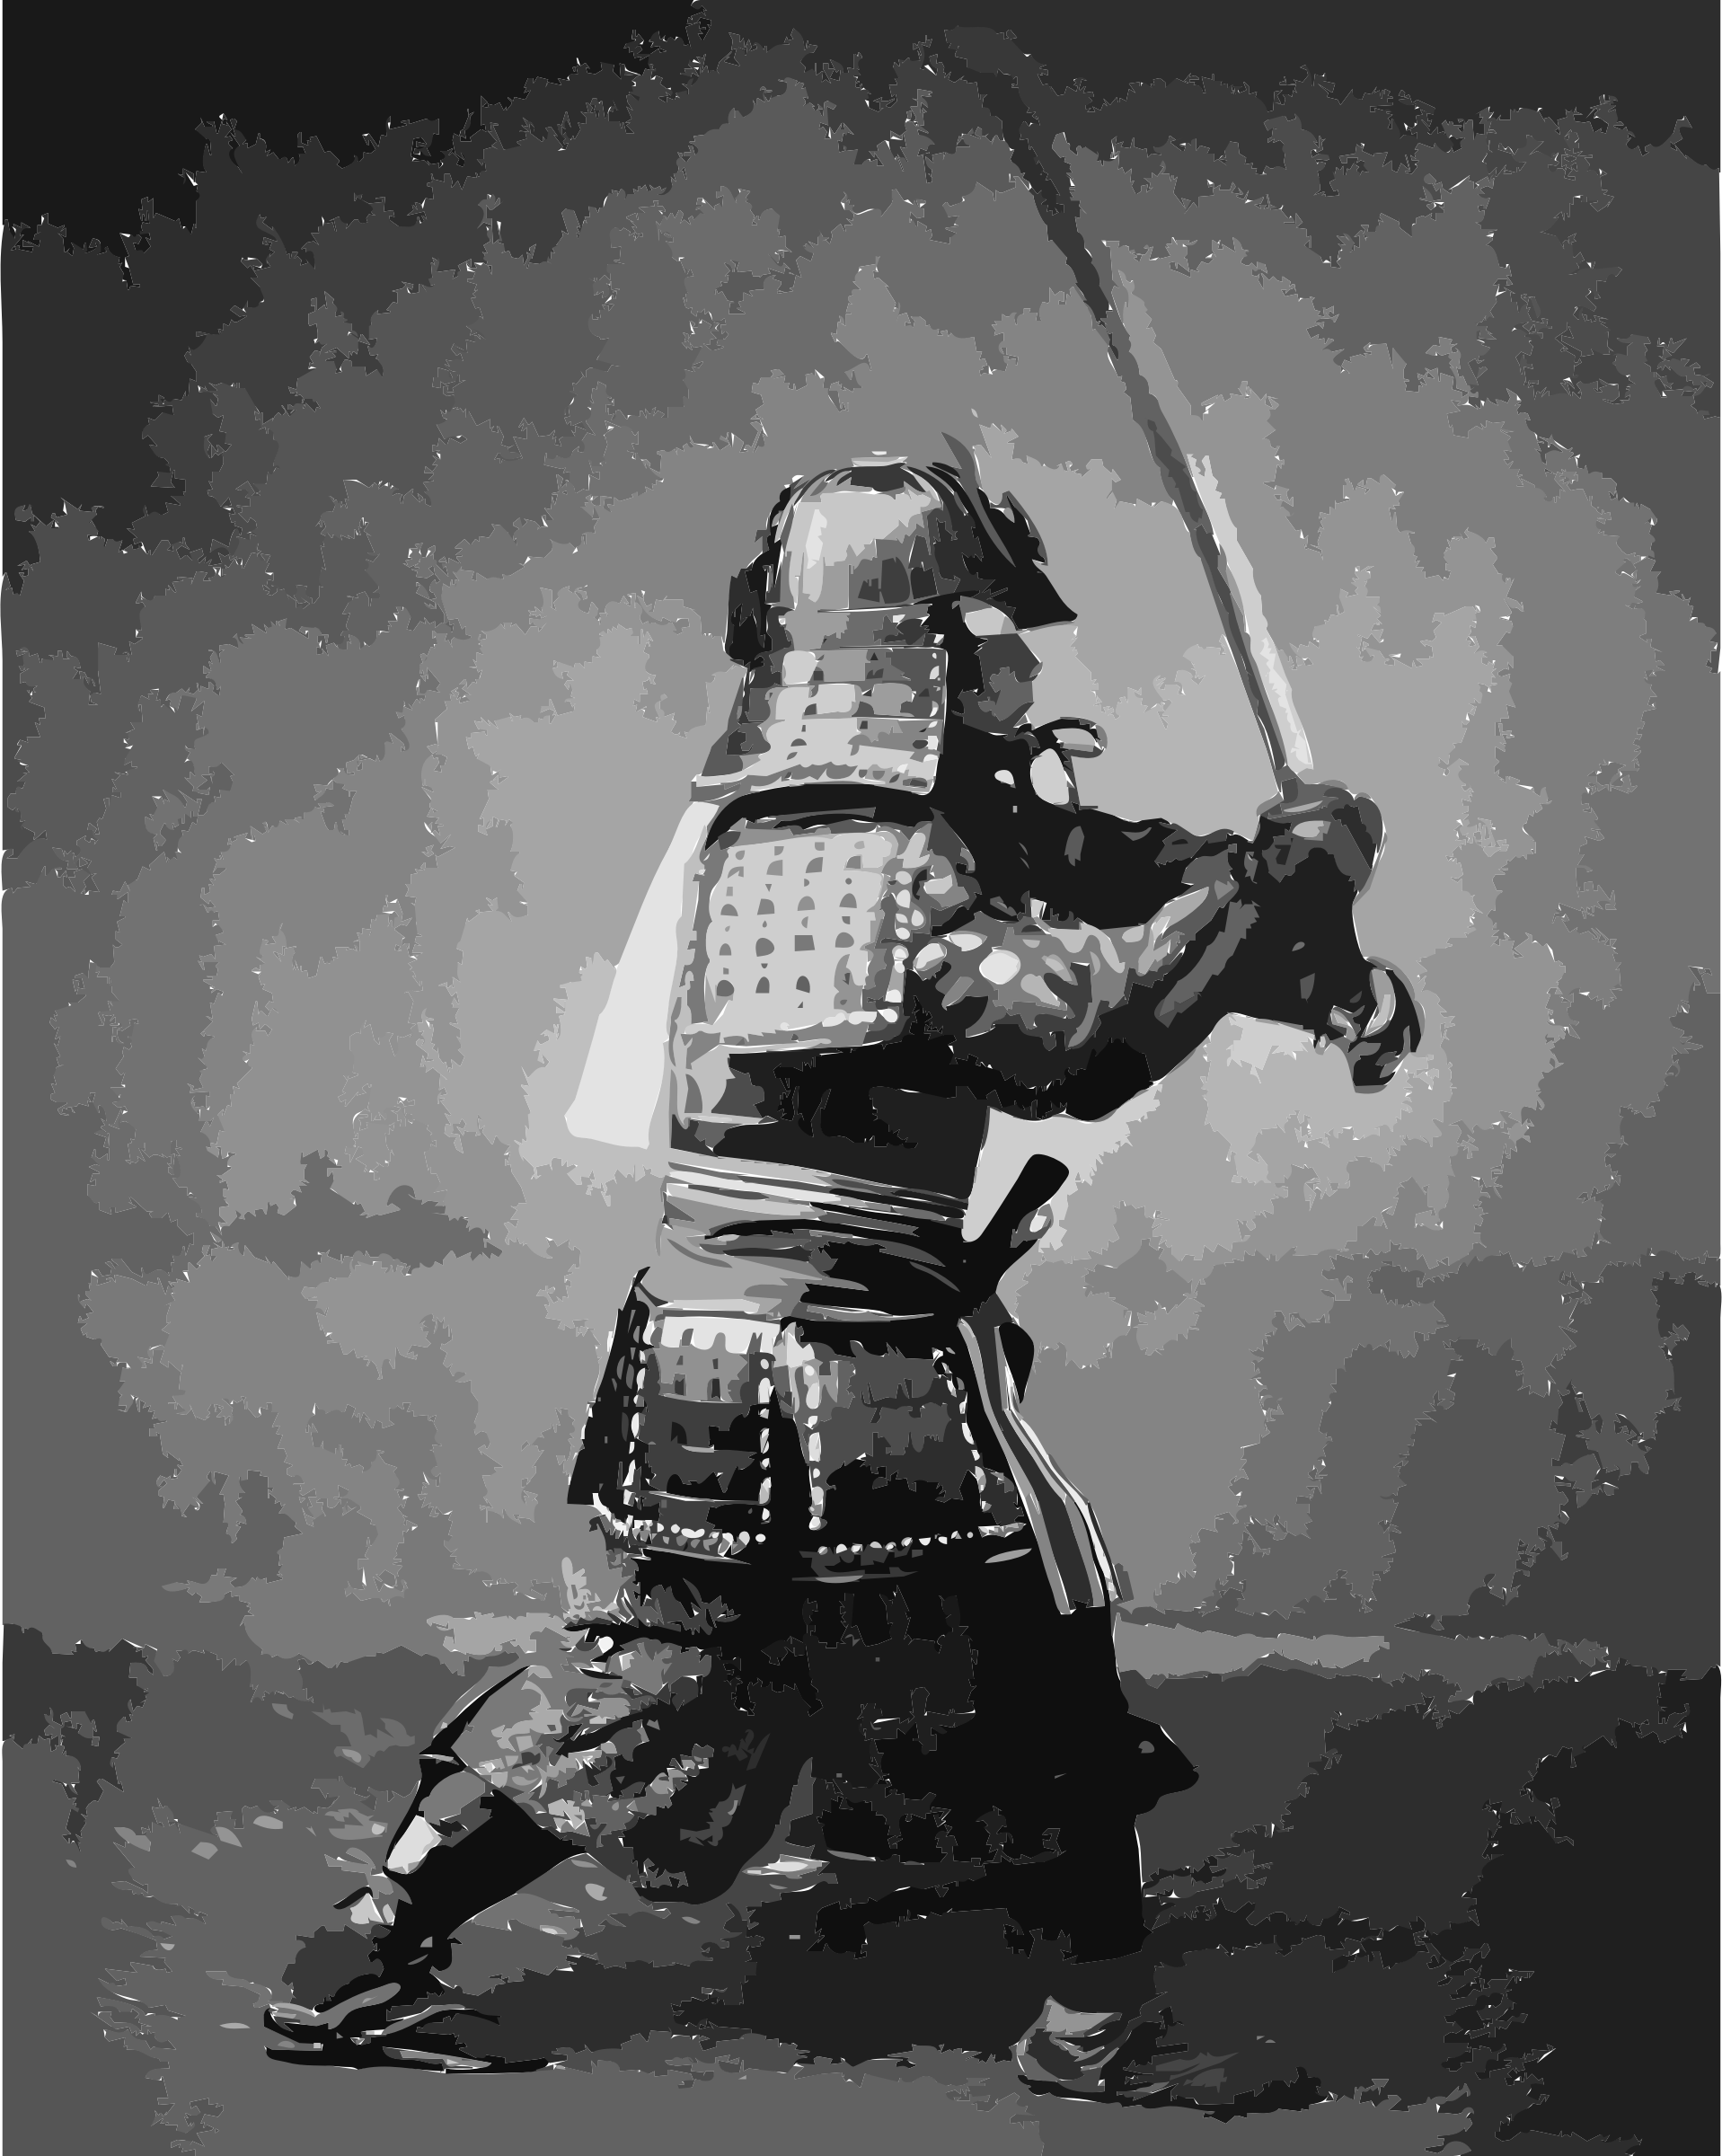 samurai clipart outline